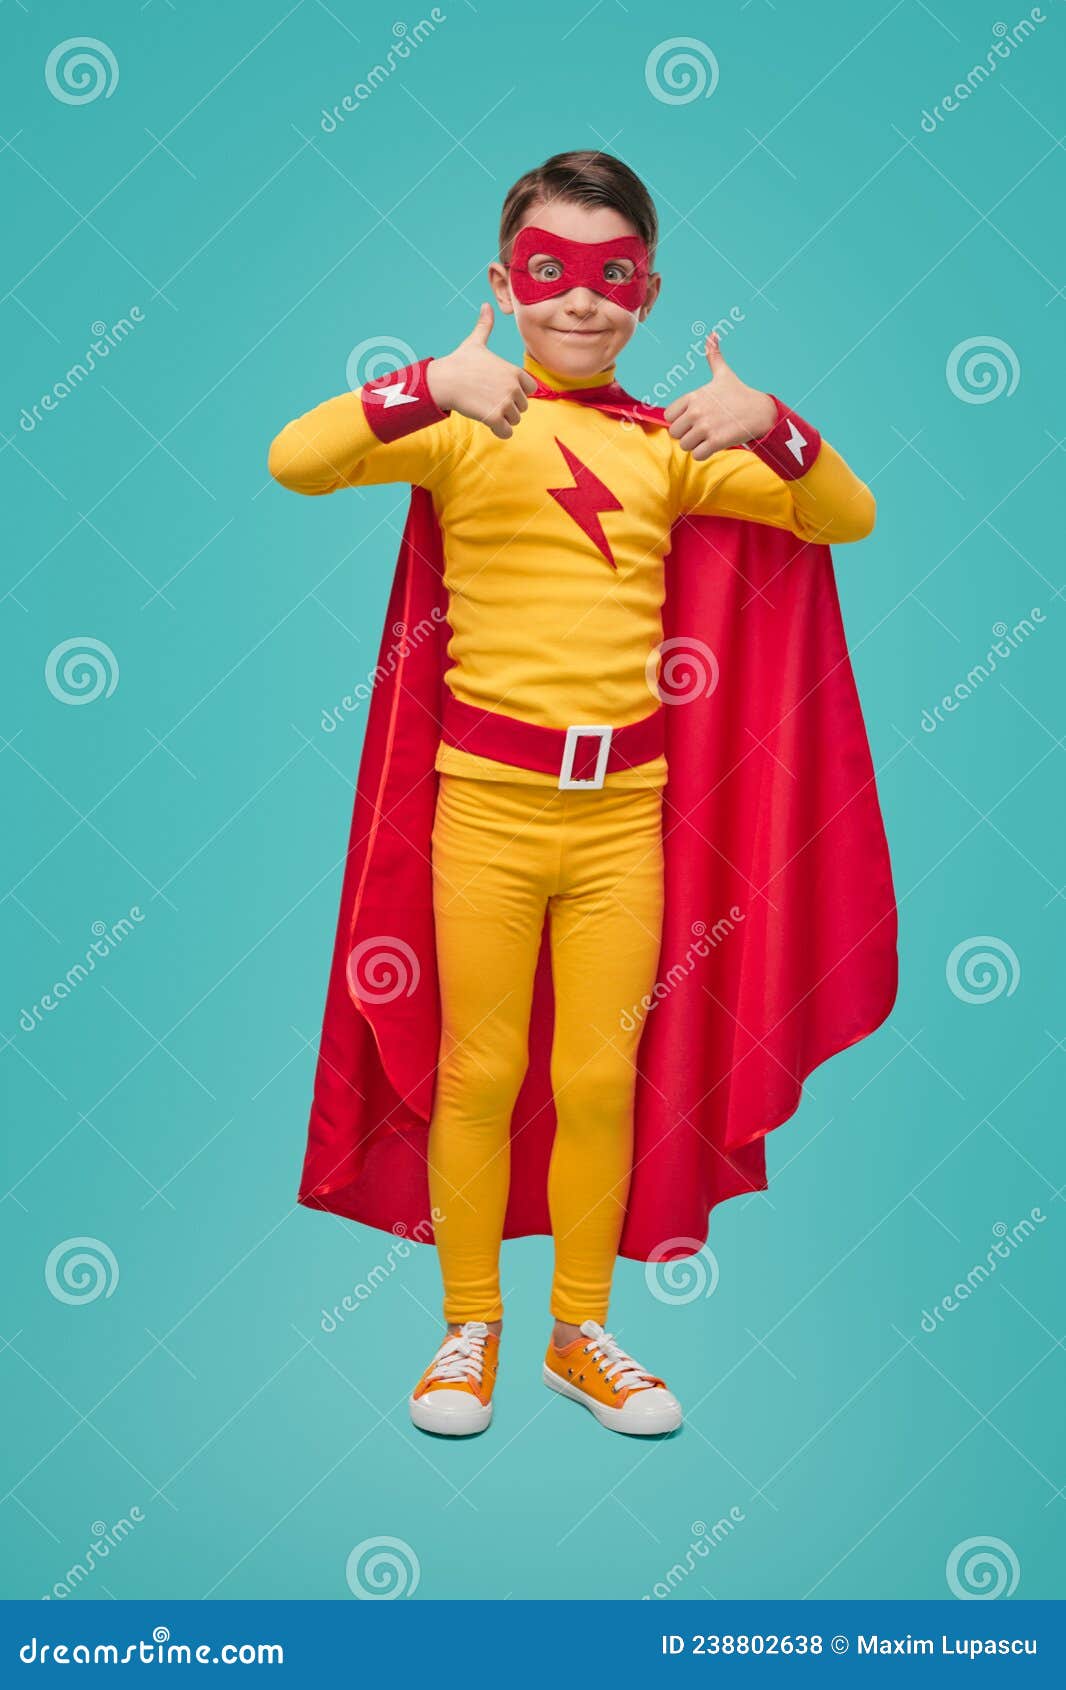 152 Superhero Lightning Stock Photos - Free & Royalty-Free Stock Photos  from Dreamstime